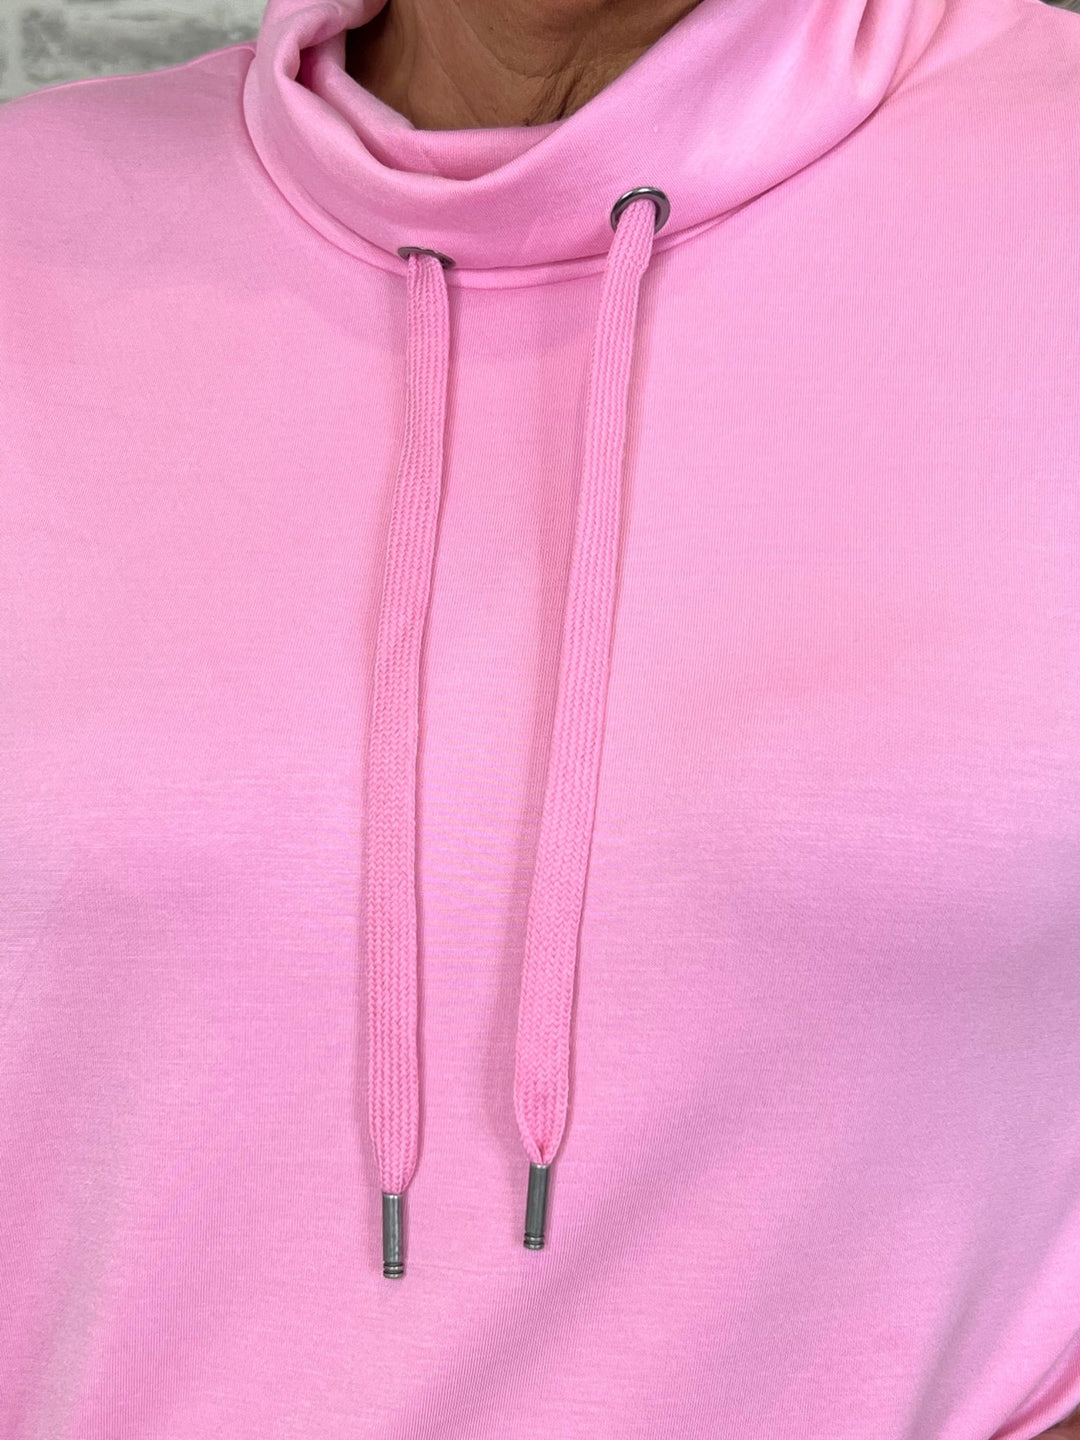 Soya Concept Banu Sweatshirt In Light Pink - Crabtree Cottage